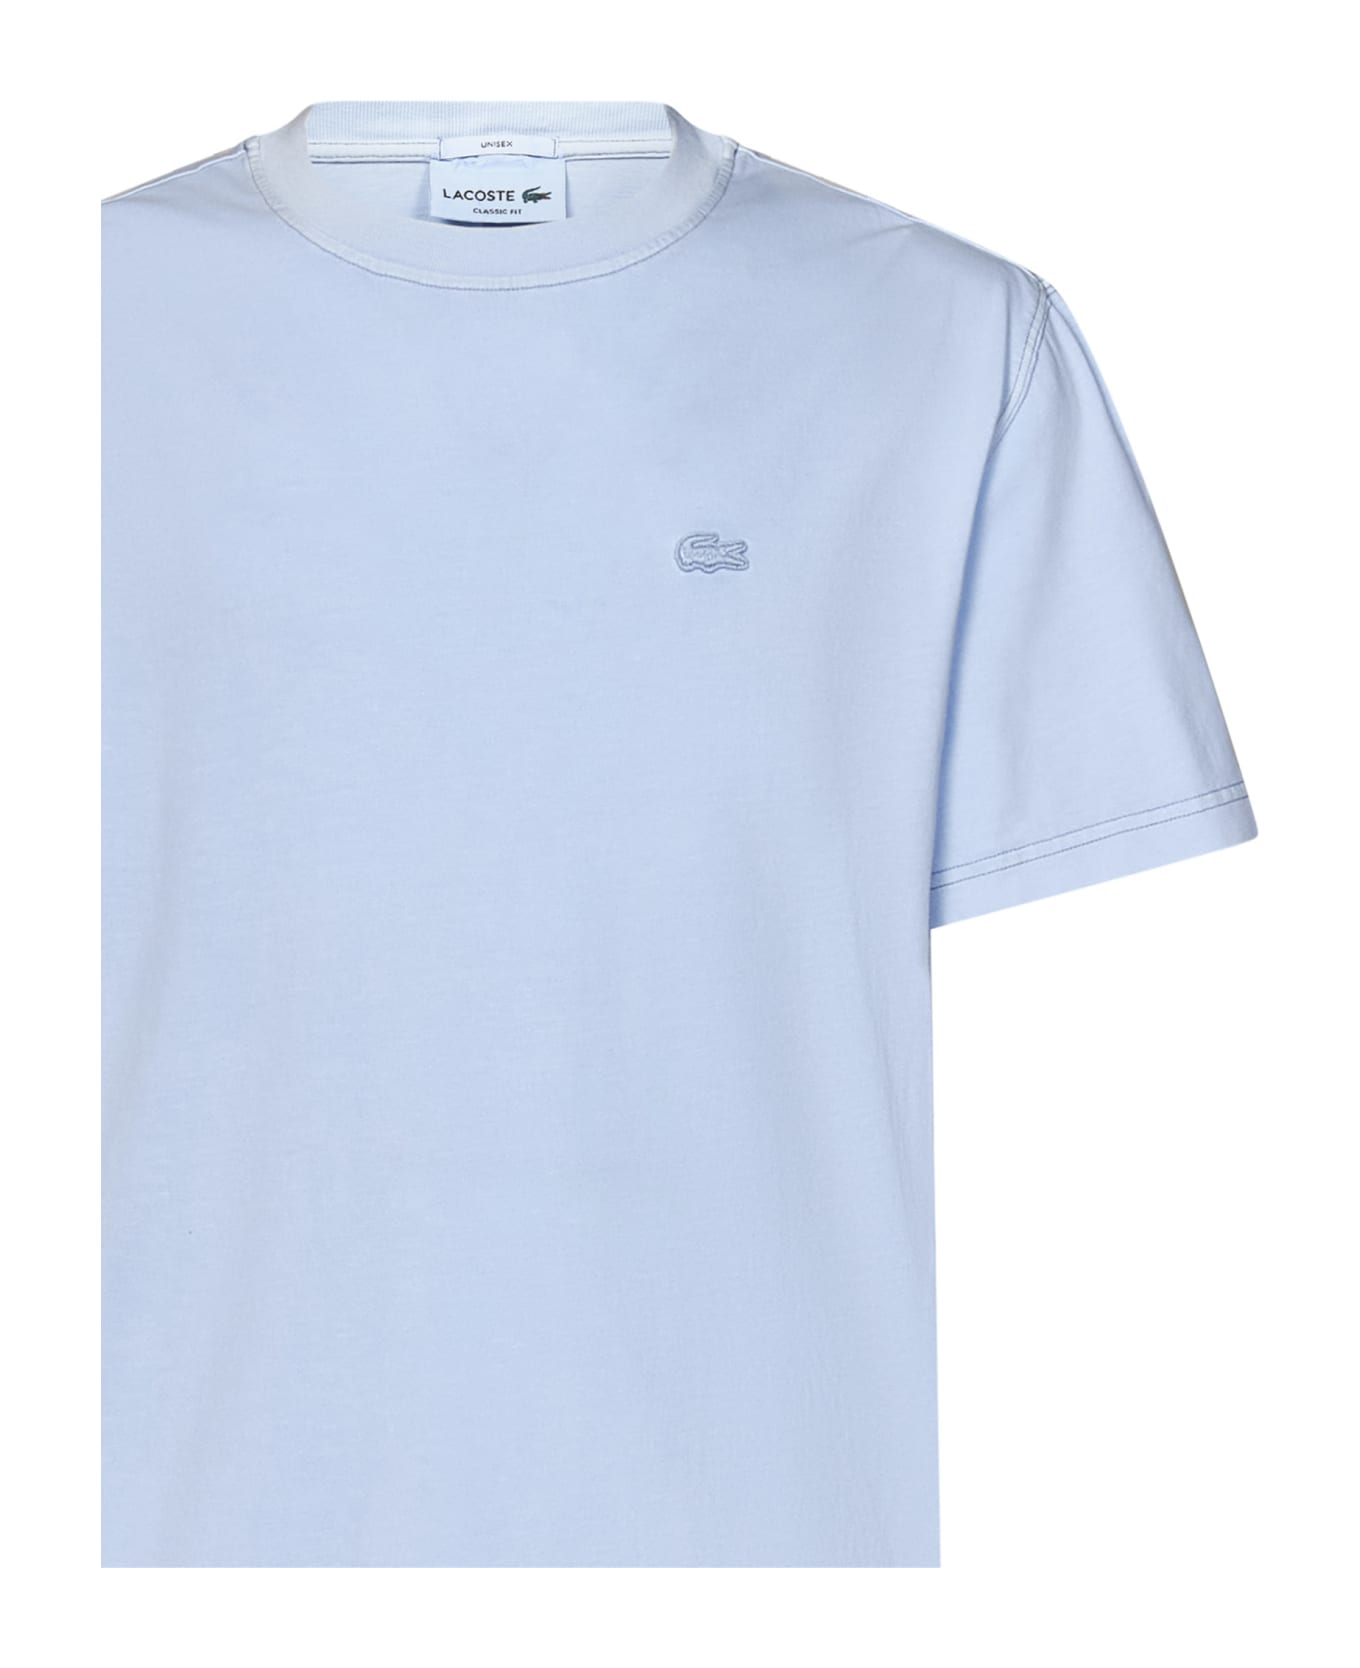 Lacoste T-shirt - Light blue